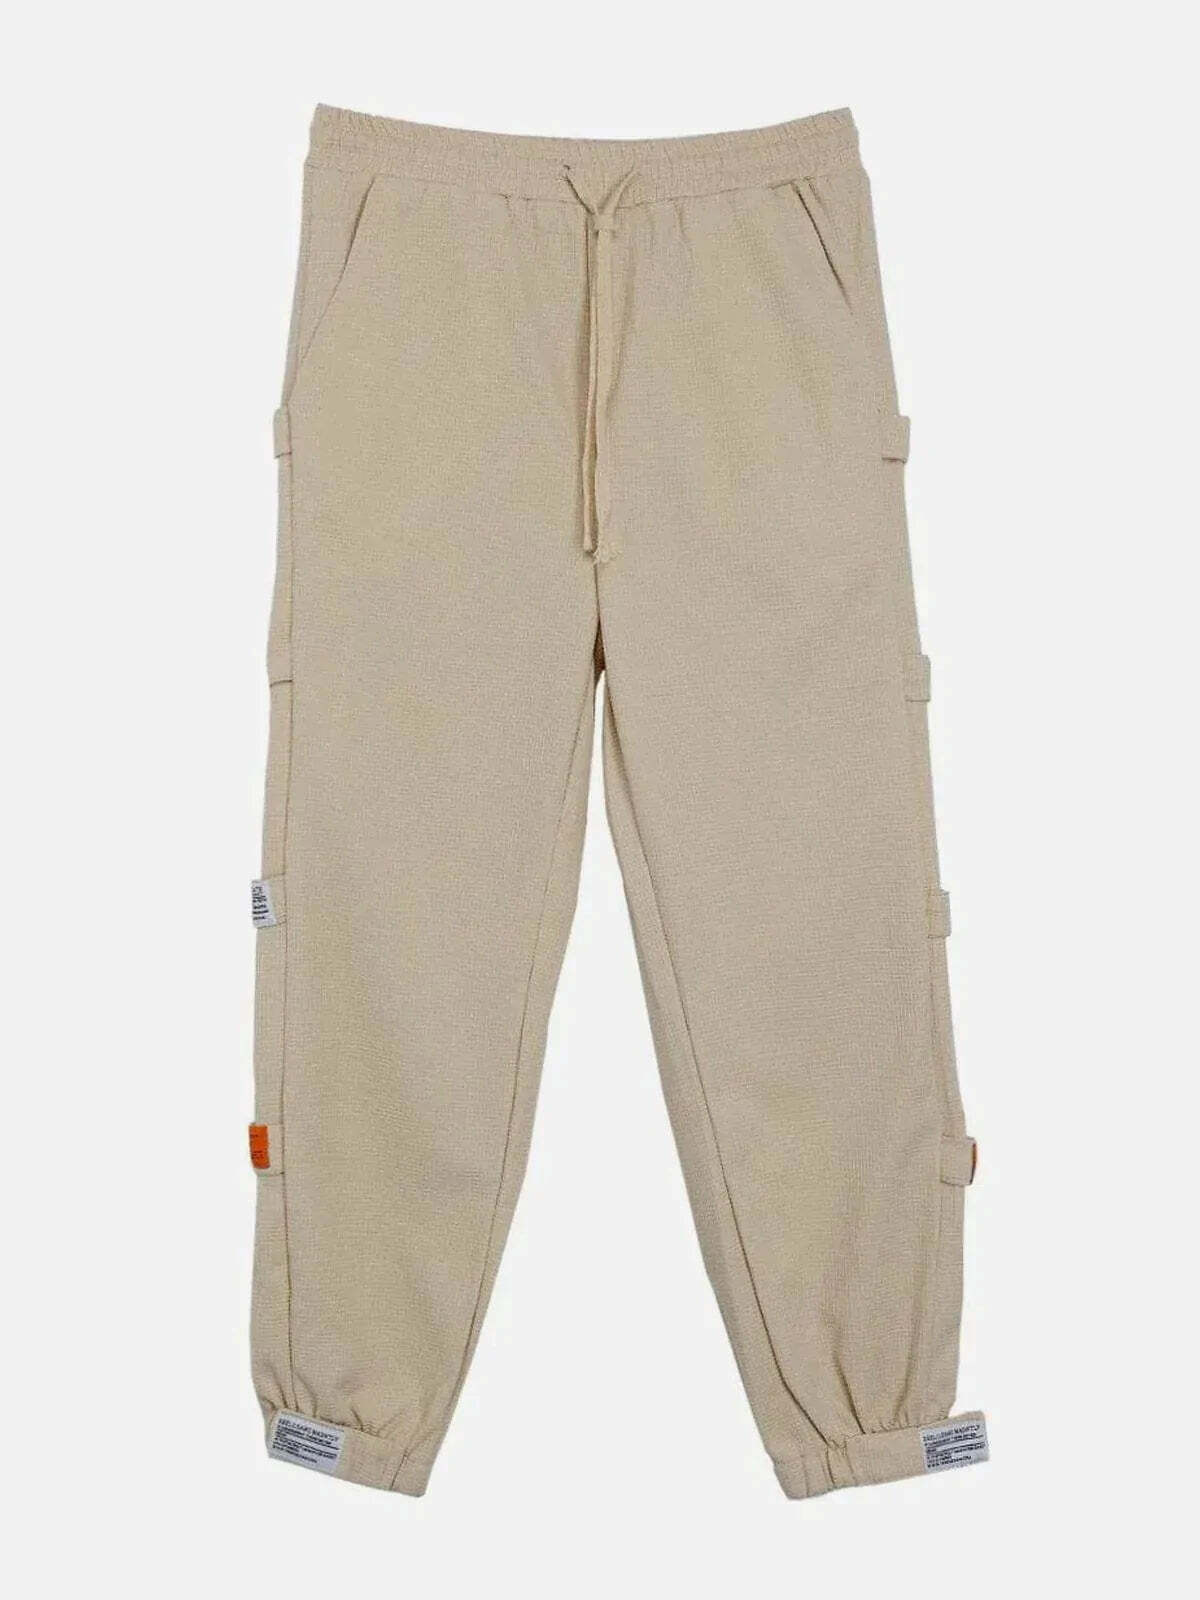 adaptive velcro cargo pants functional & trendy streetwear 8897